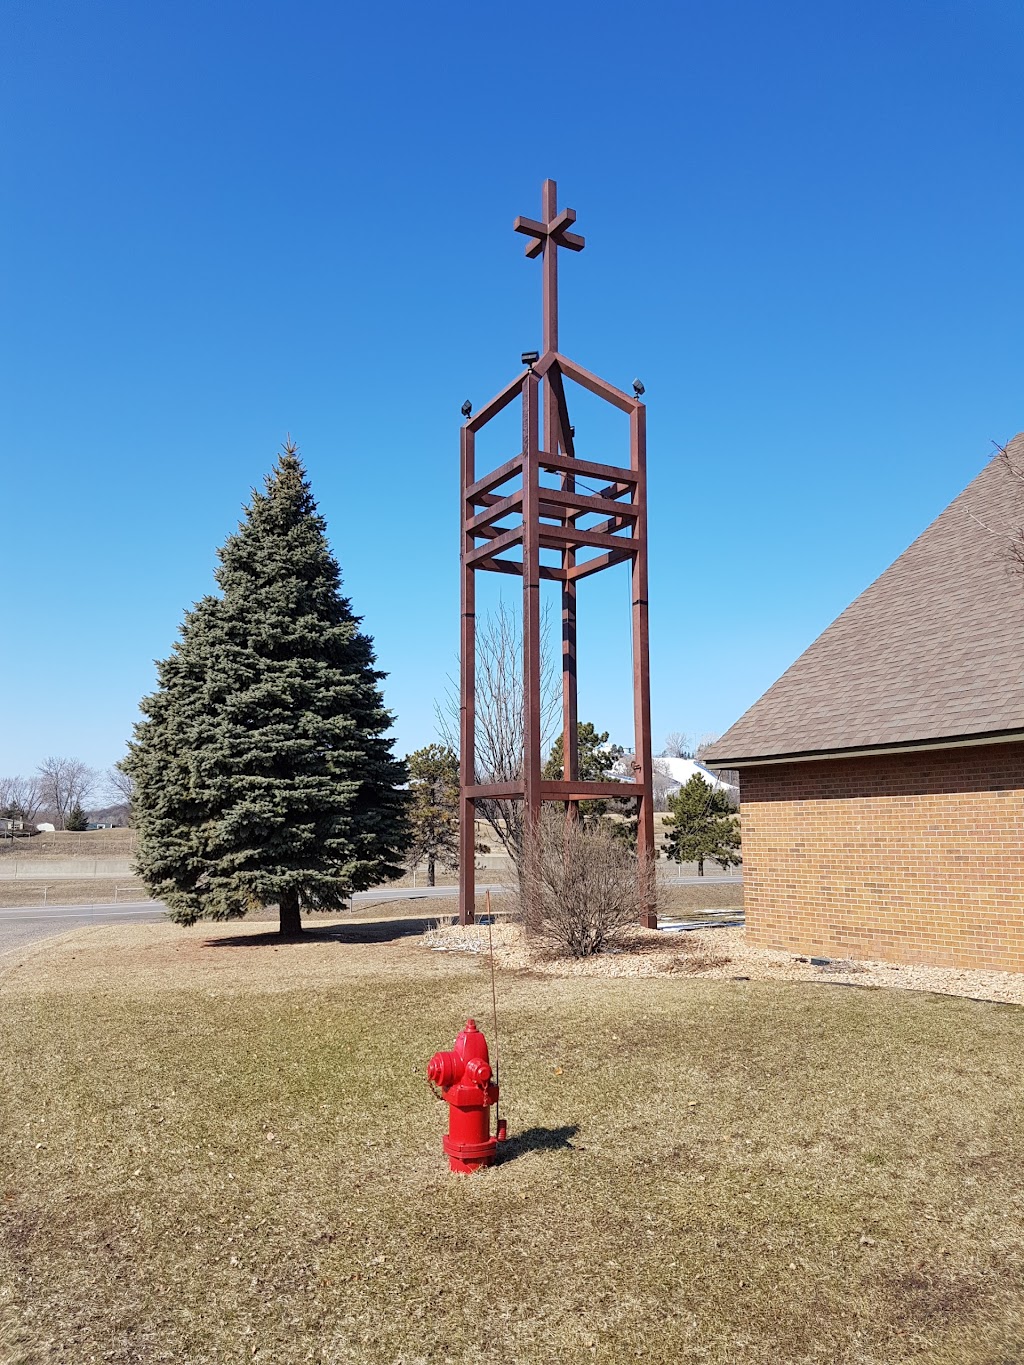 Nativity Episcopal Church | 15601 Maple Island Rd, Burnsville, MN 55306, USA | Phone: (952) 435-8687